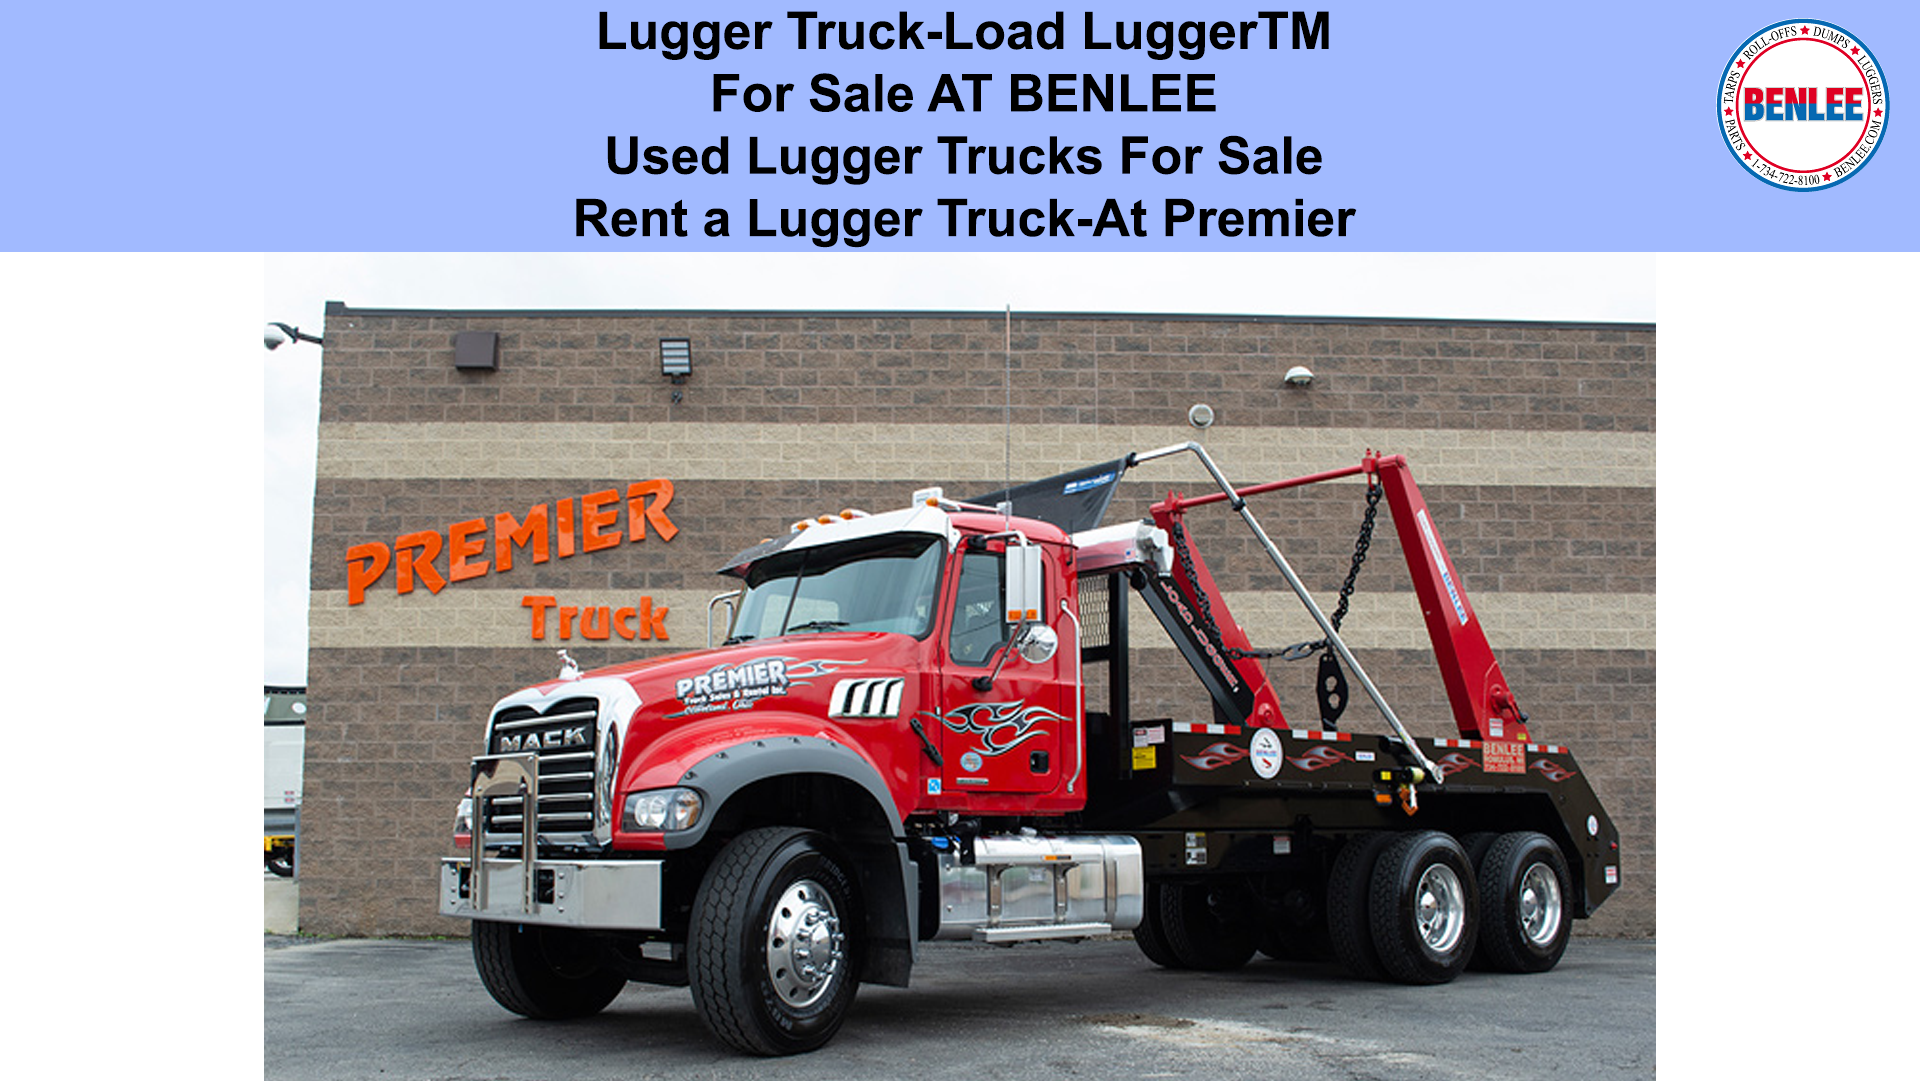 Lugger Truck-Load LuggerTM